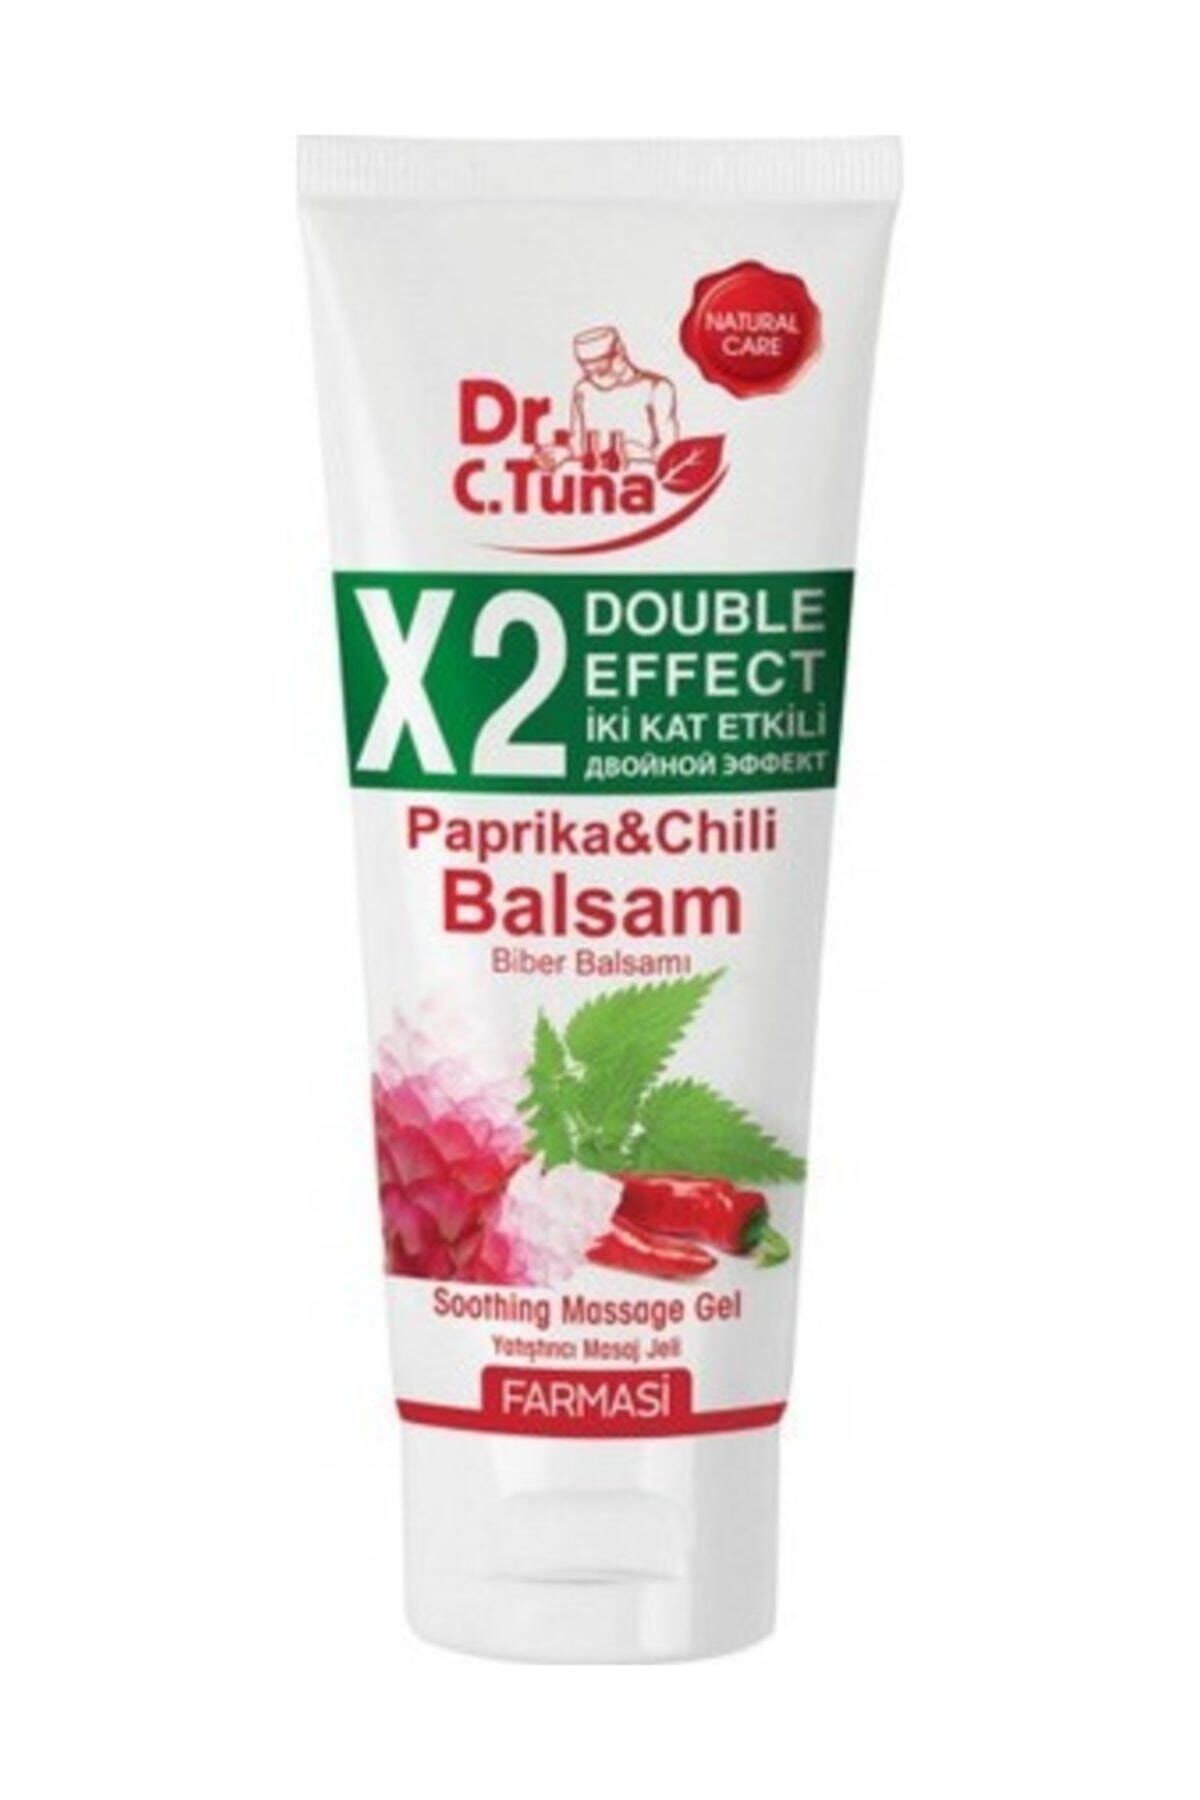 Farmasi Dr. C. Tuna X2 Double Effect Paprika Chili Biber Balsamı Masaj Jeli